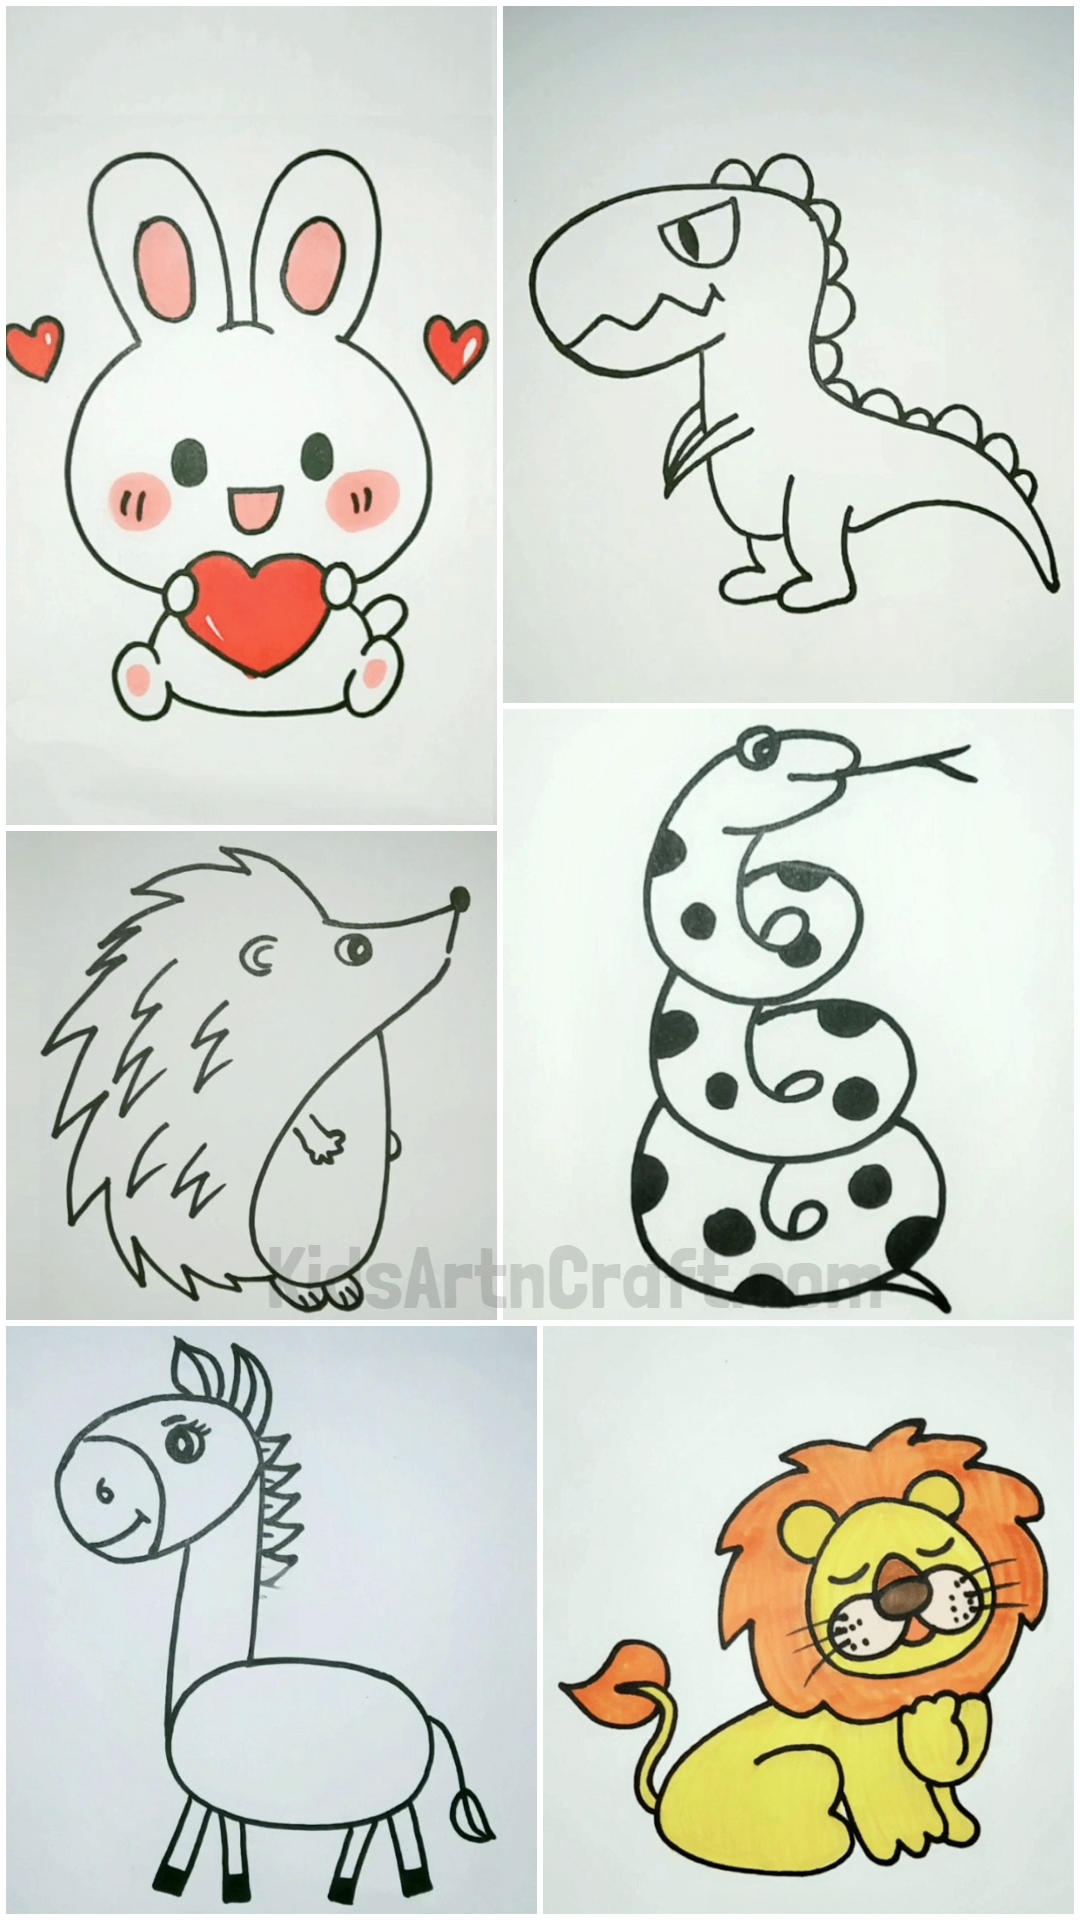 Easy To Make Animal Drawings For Kids